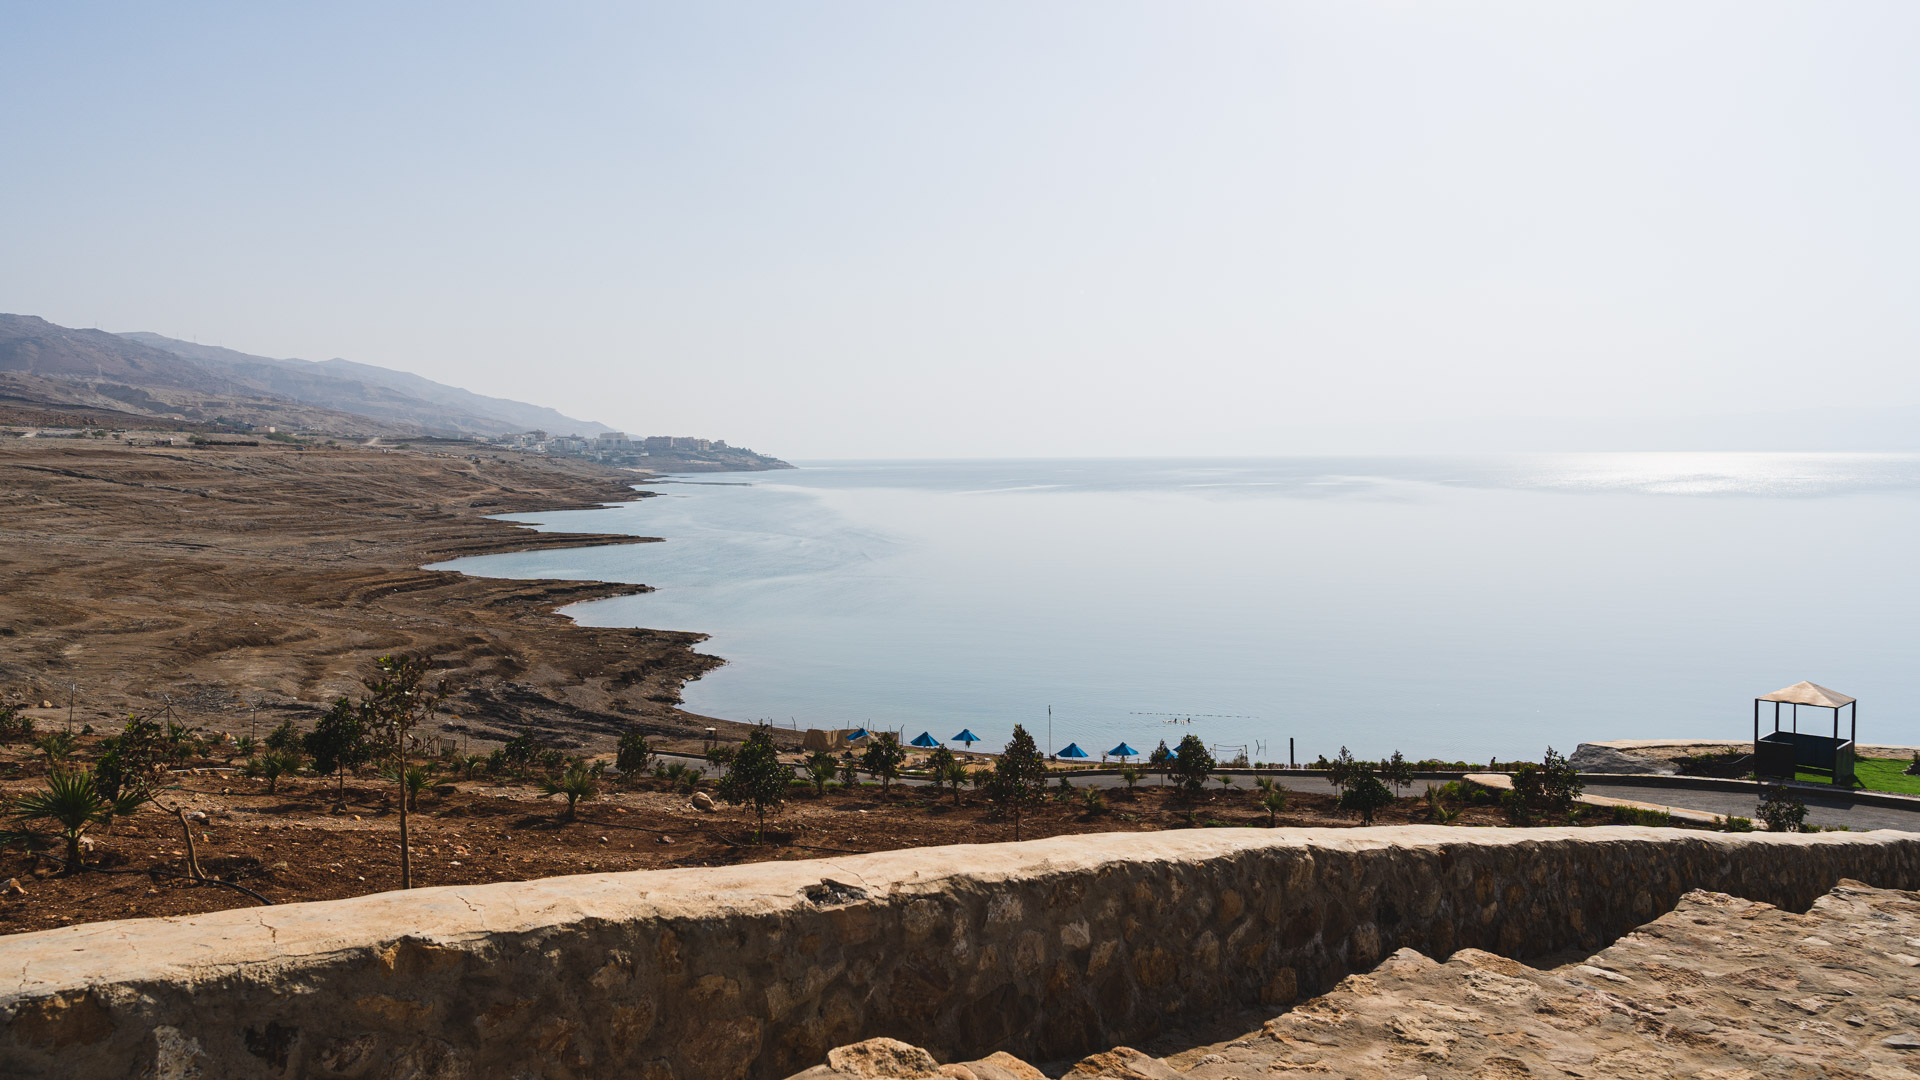 The Dead Sea view from Jordan